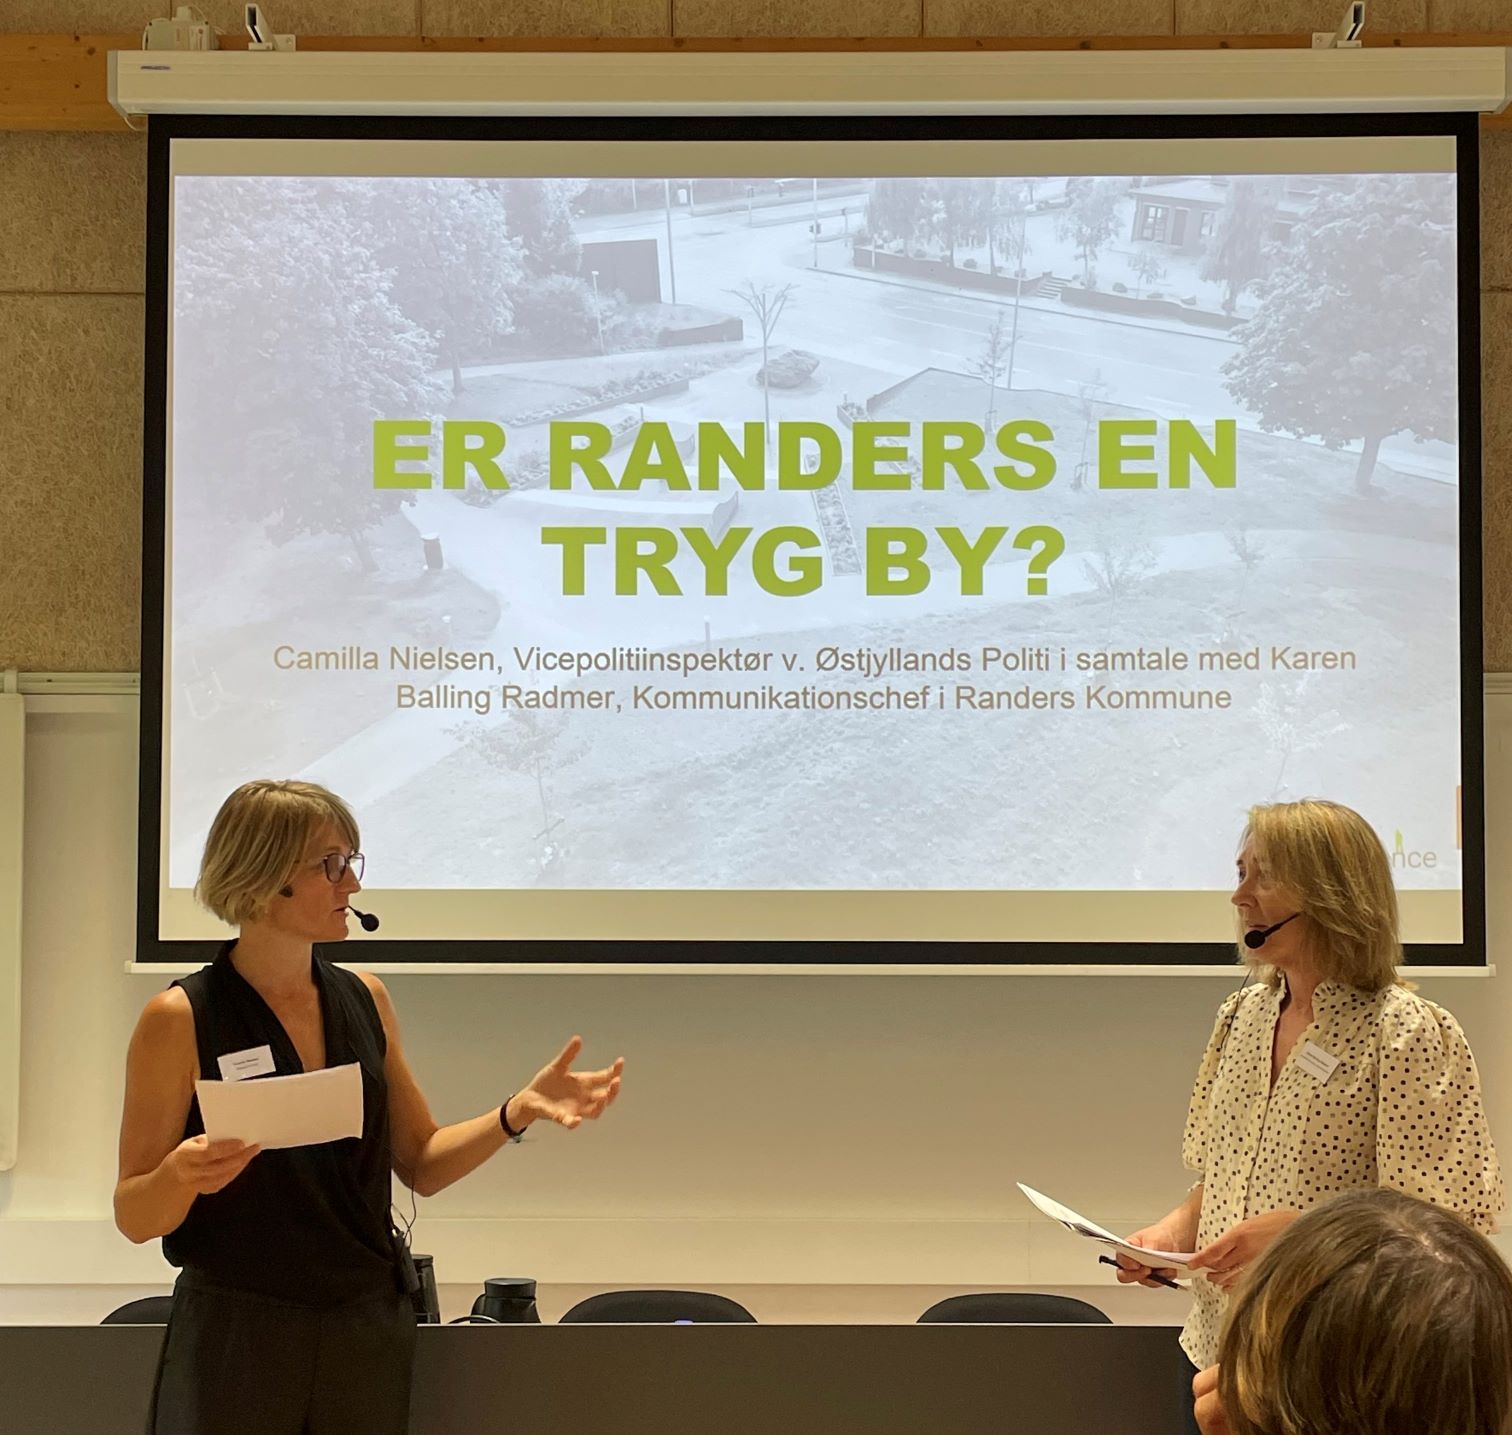 Oplæg med vicepolitiinspektør v. Østjyllands politi Camilla Nielsen og Kommunikationschef i Randers Kommune, Karen Balling Radmer.